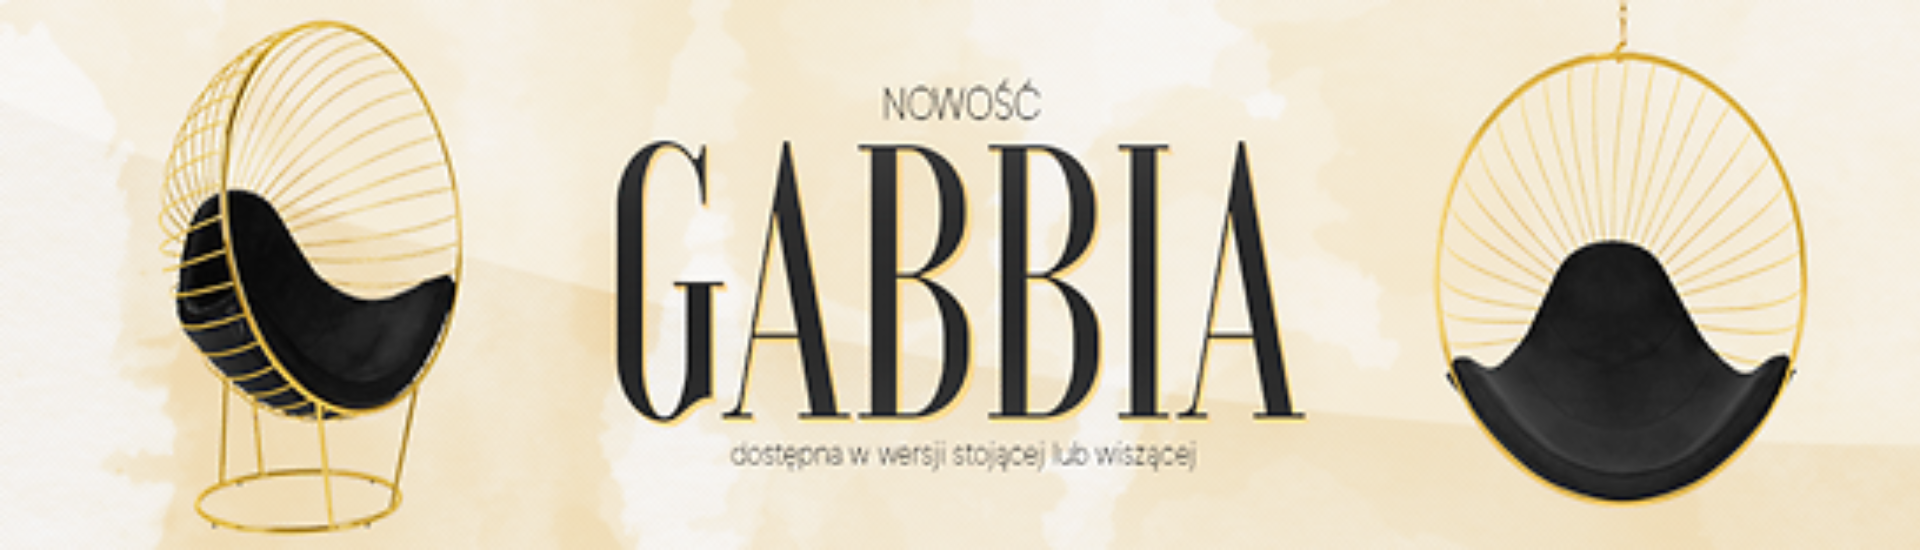 gabbia-1-